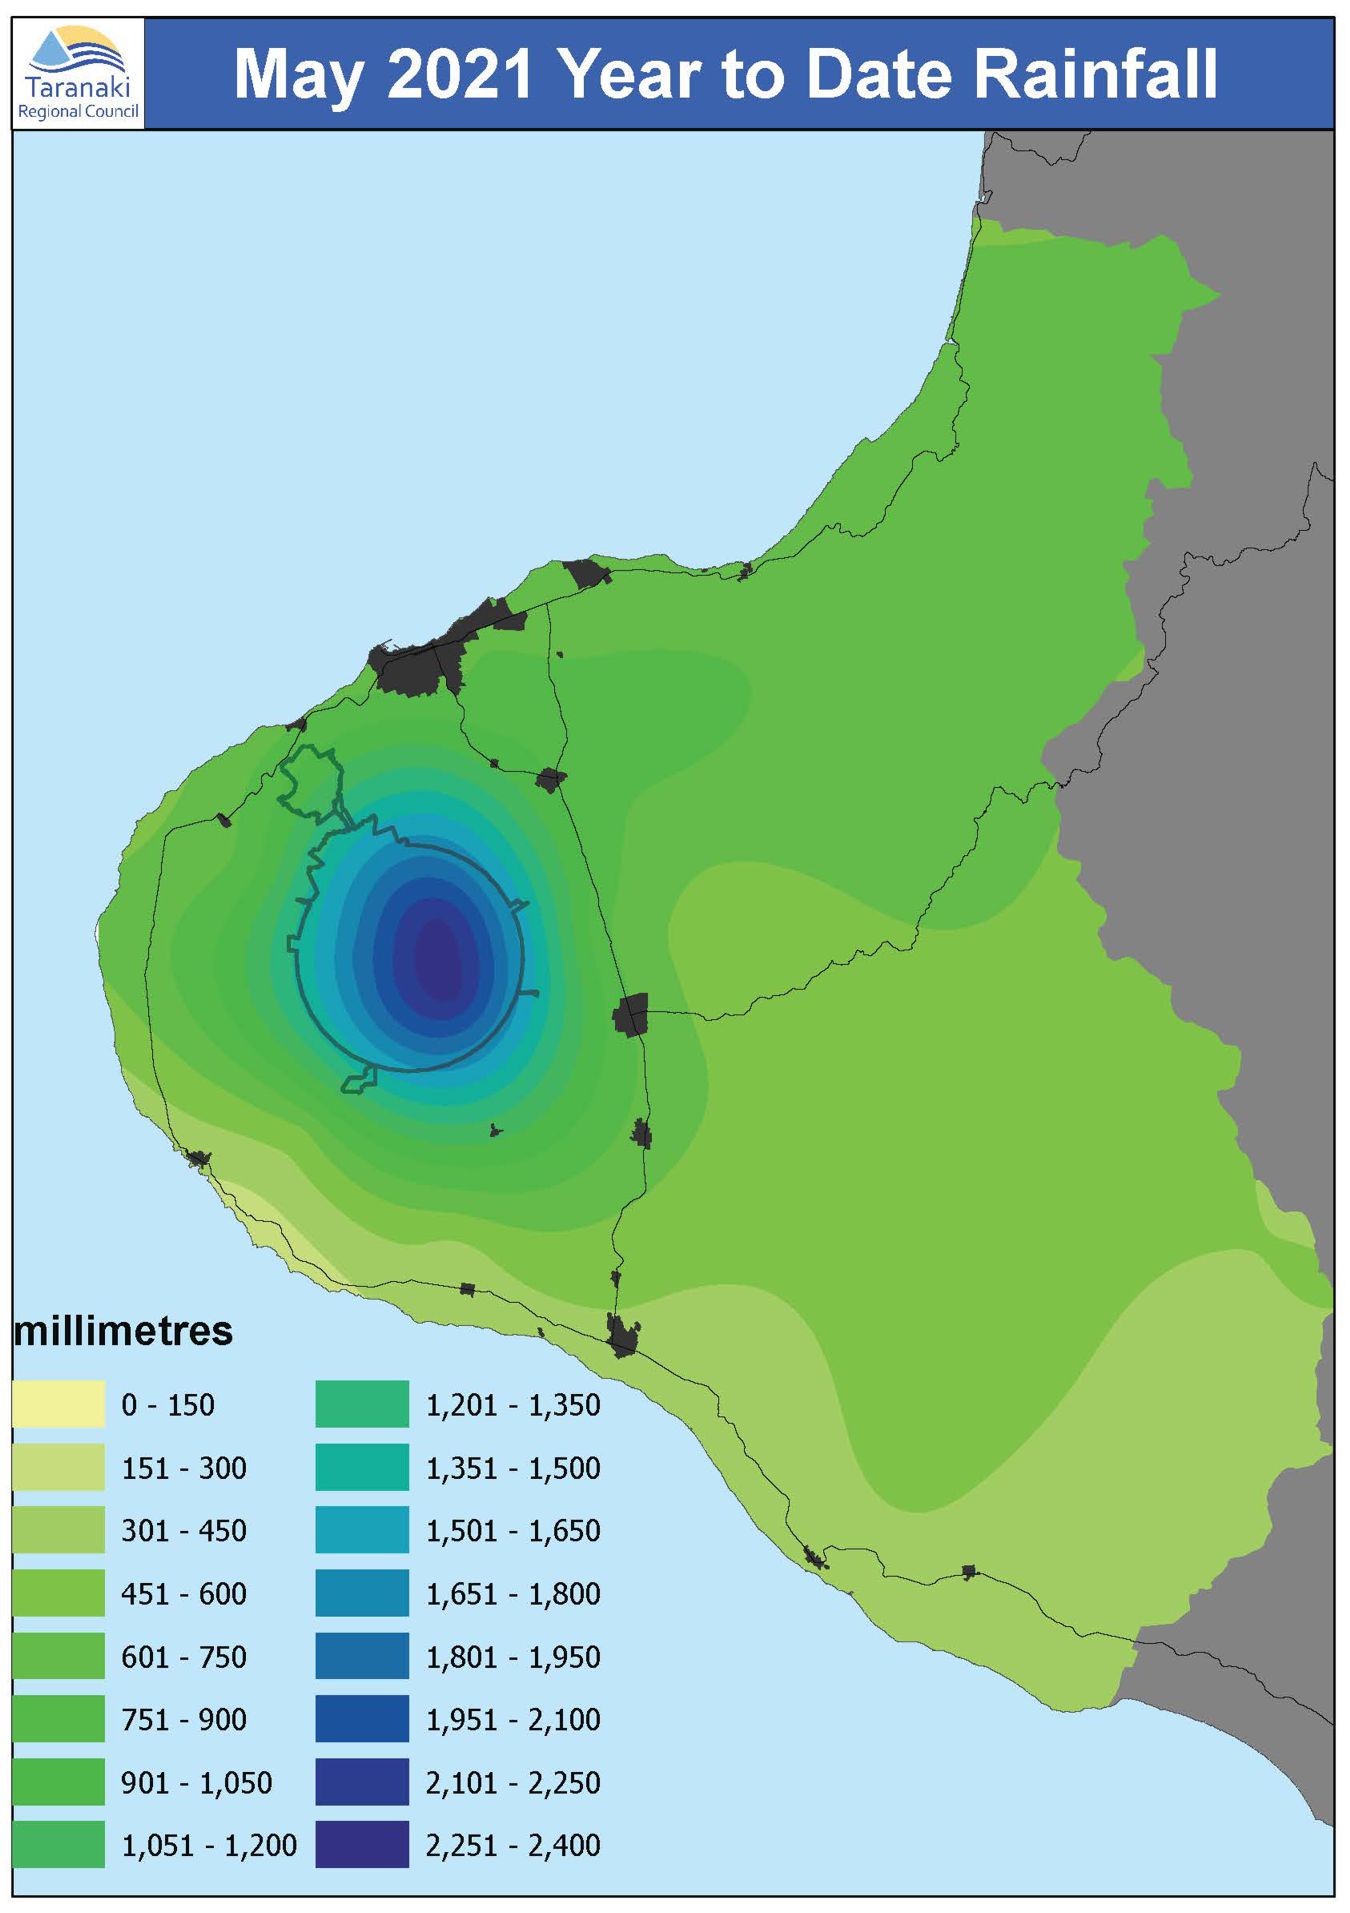 January-May 2021 rainfall distribution